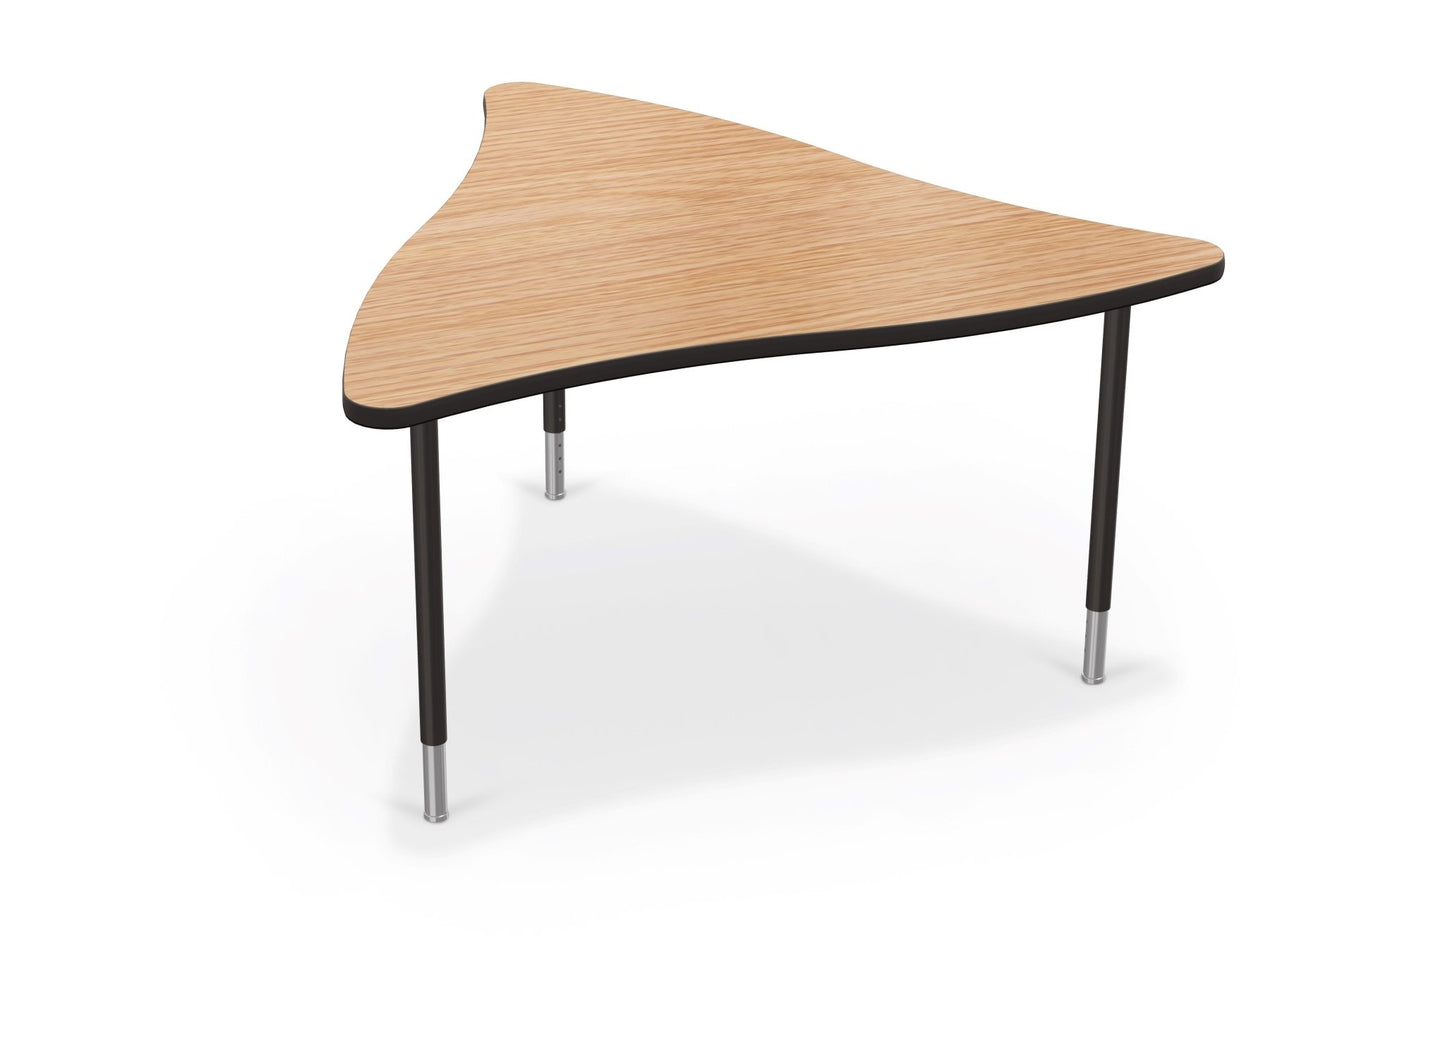 Mooreco Creator Configurable Tables - Triangle - Black Edgeband - Black Legs (Mooreco 1633K1) - SchoolOutlet